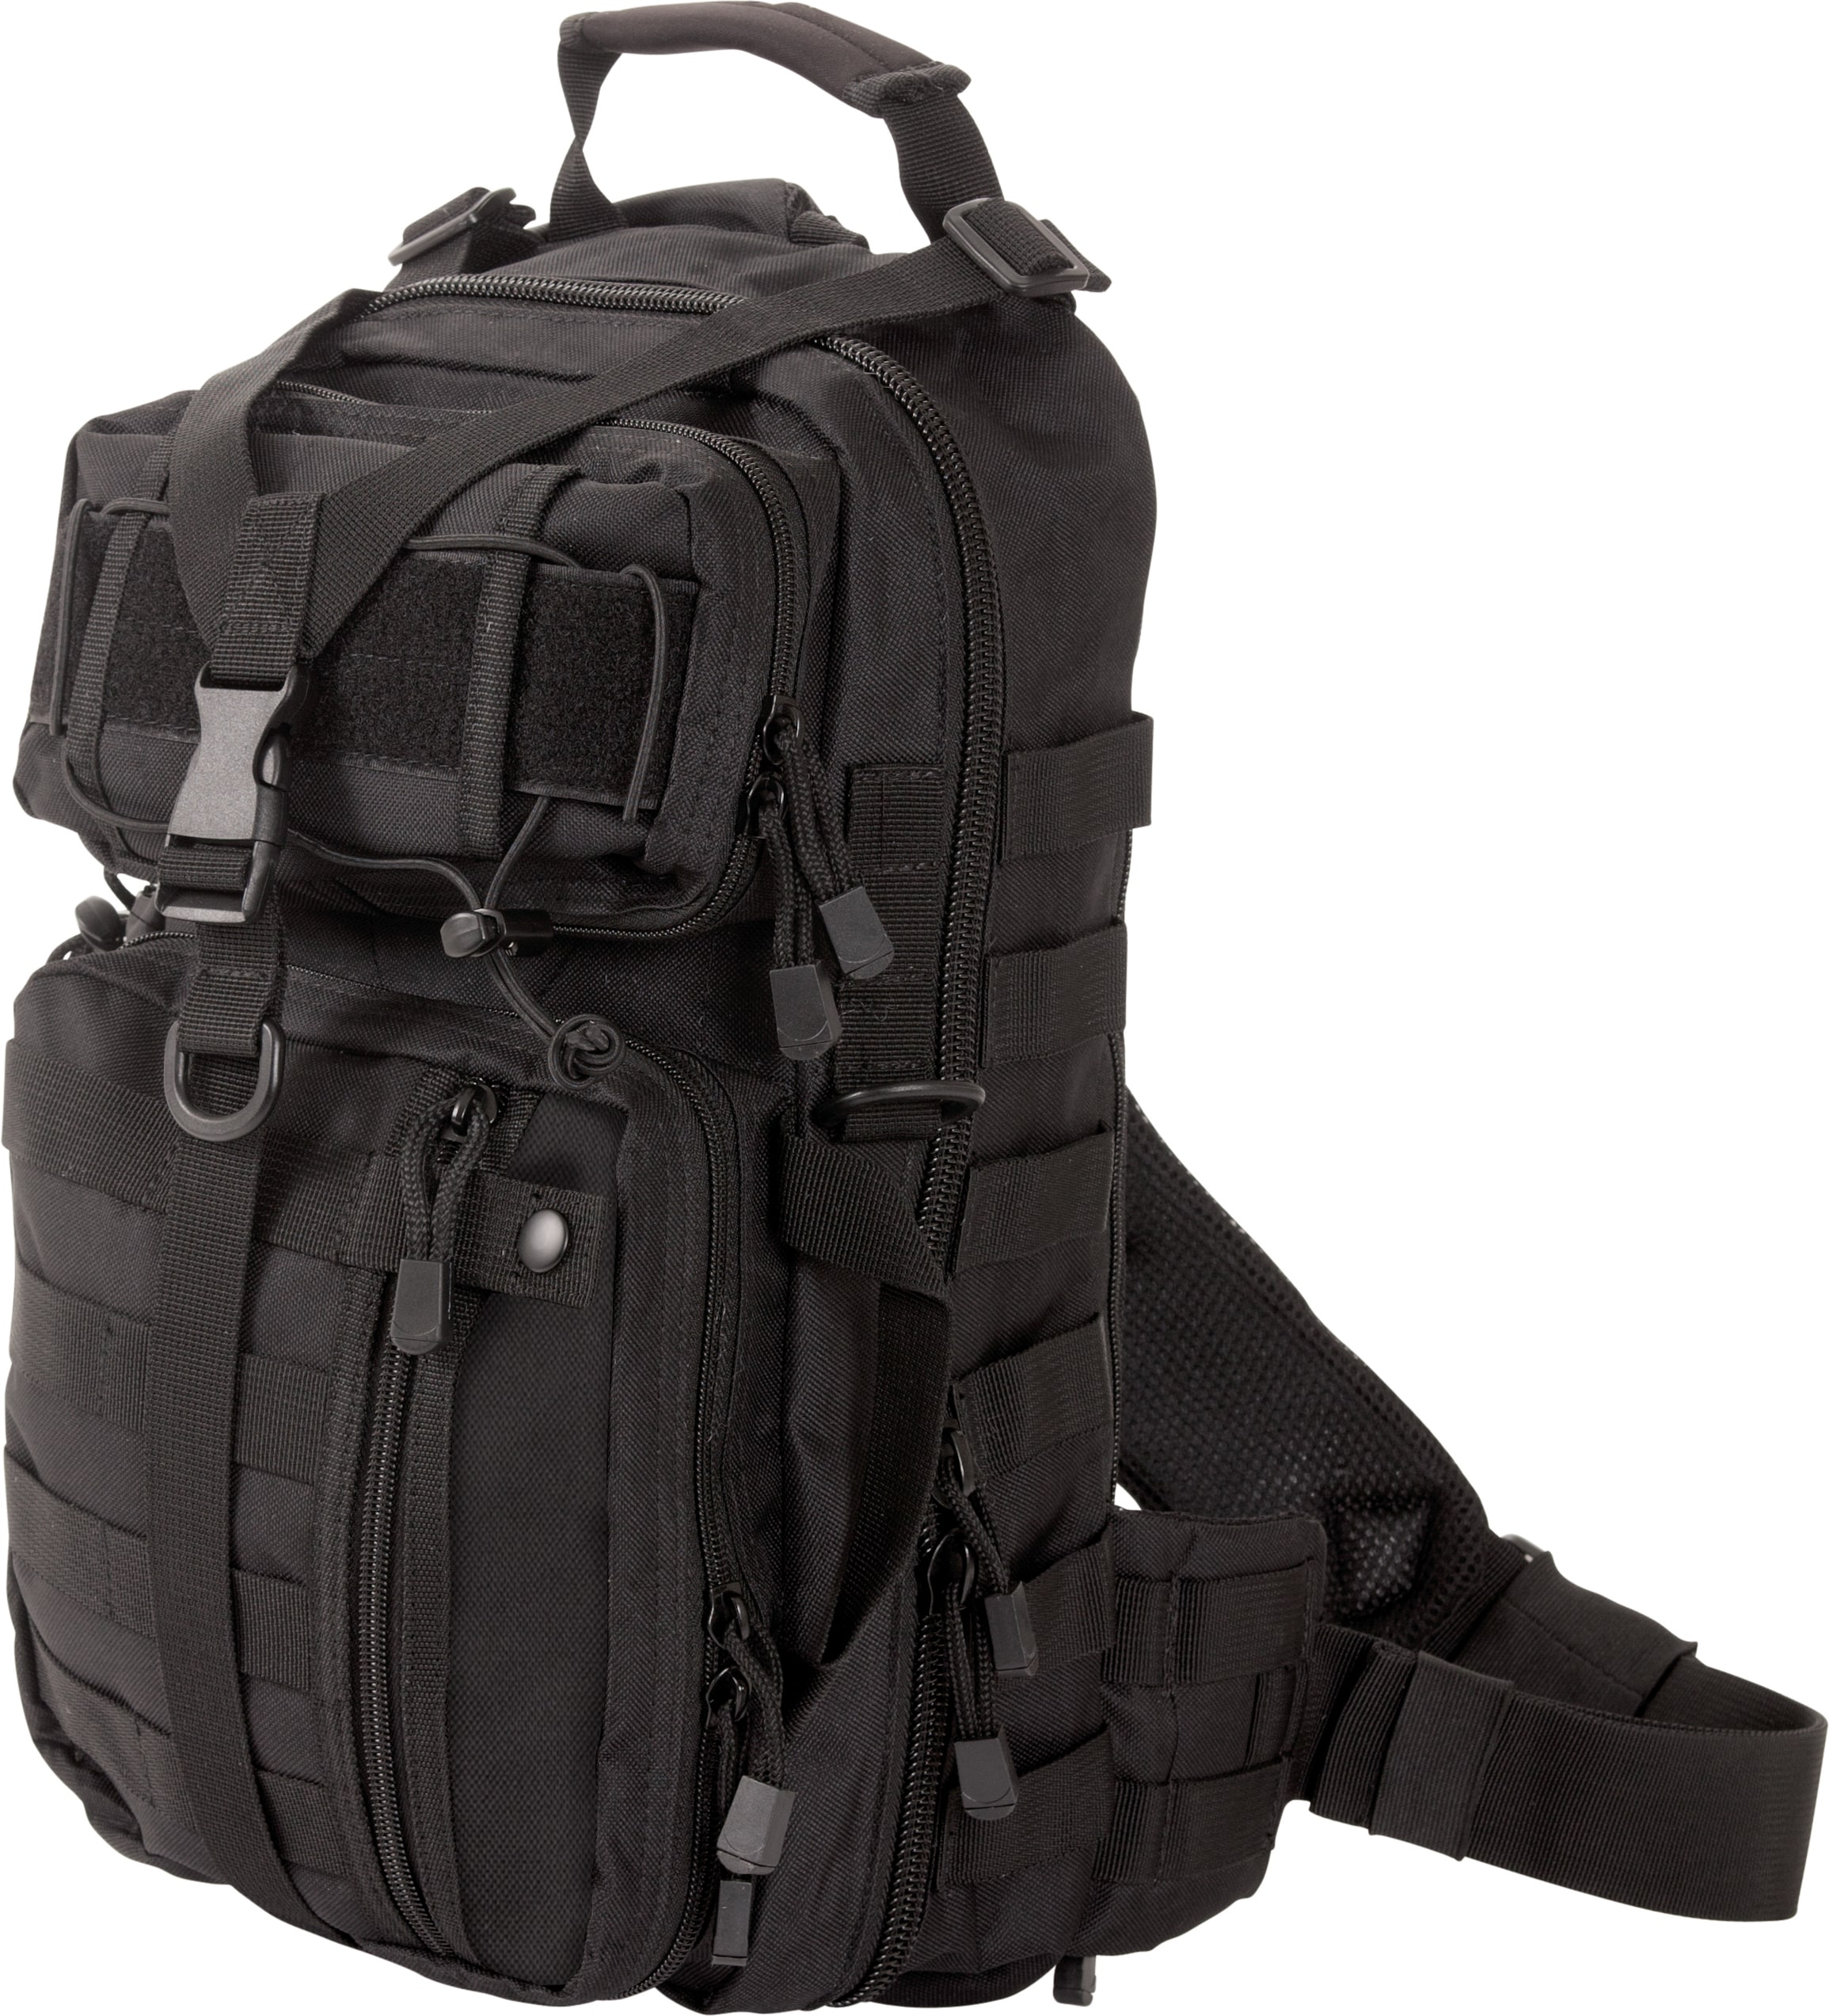 Tac-Six Tactical Range Bag with Adjustable Sling Strap, Conceal Carry ...